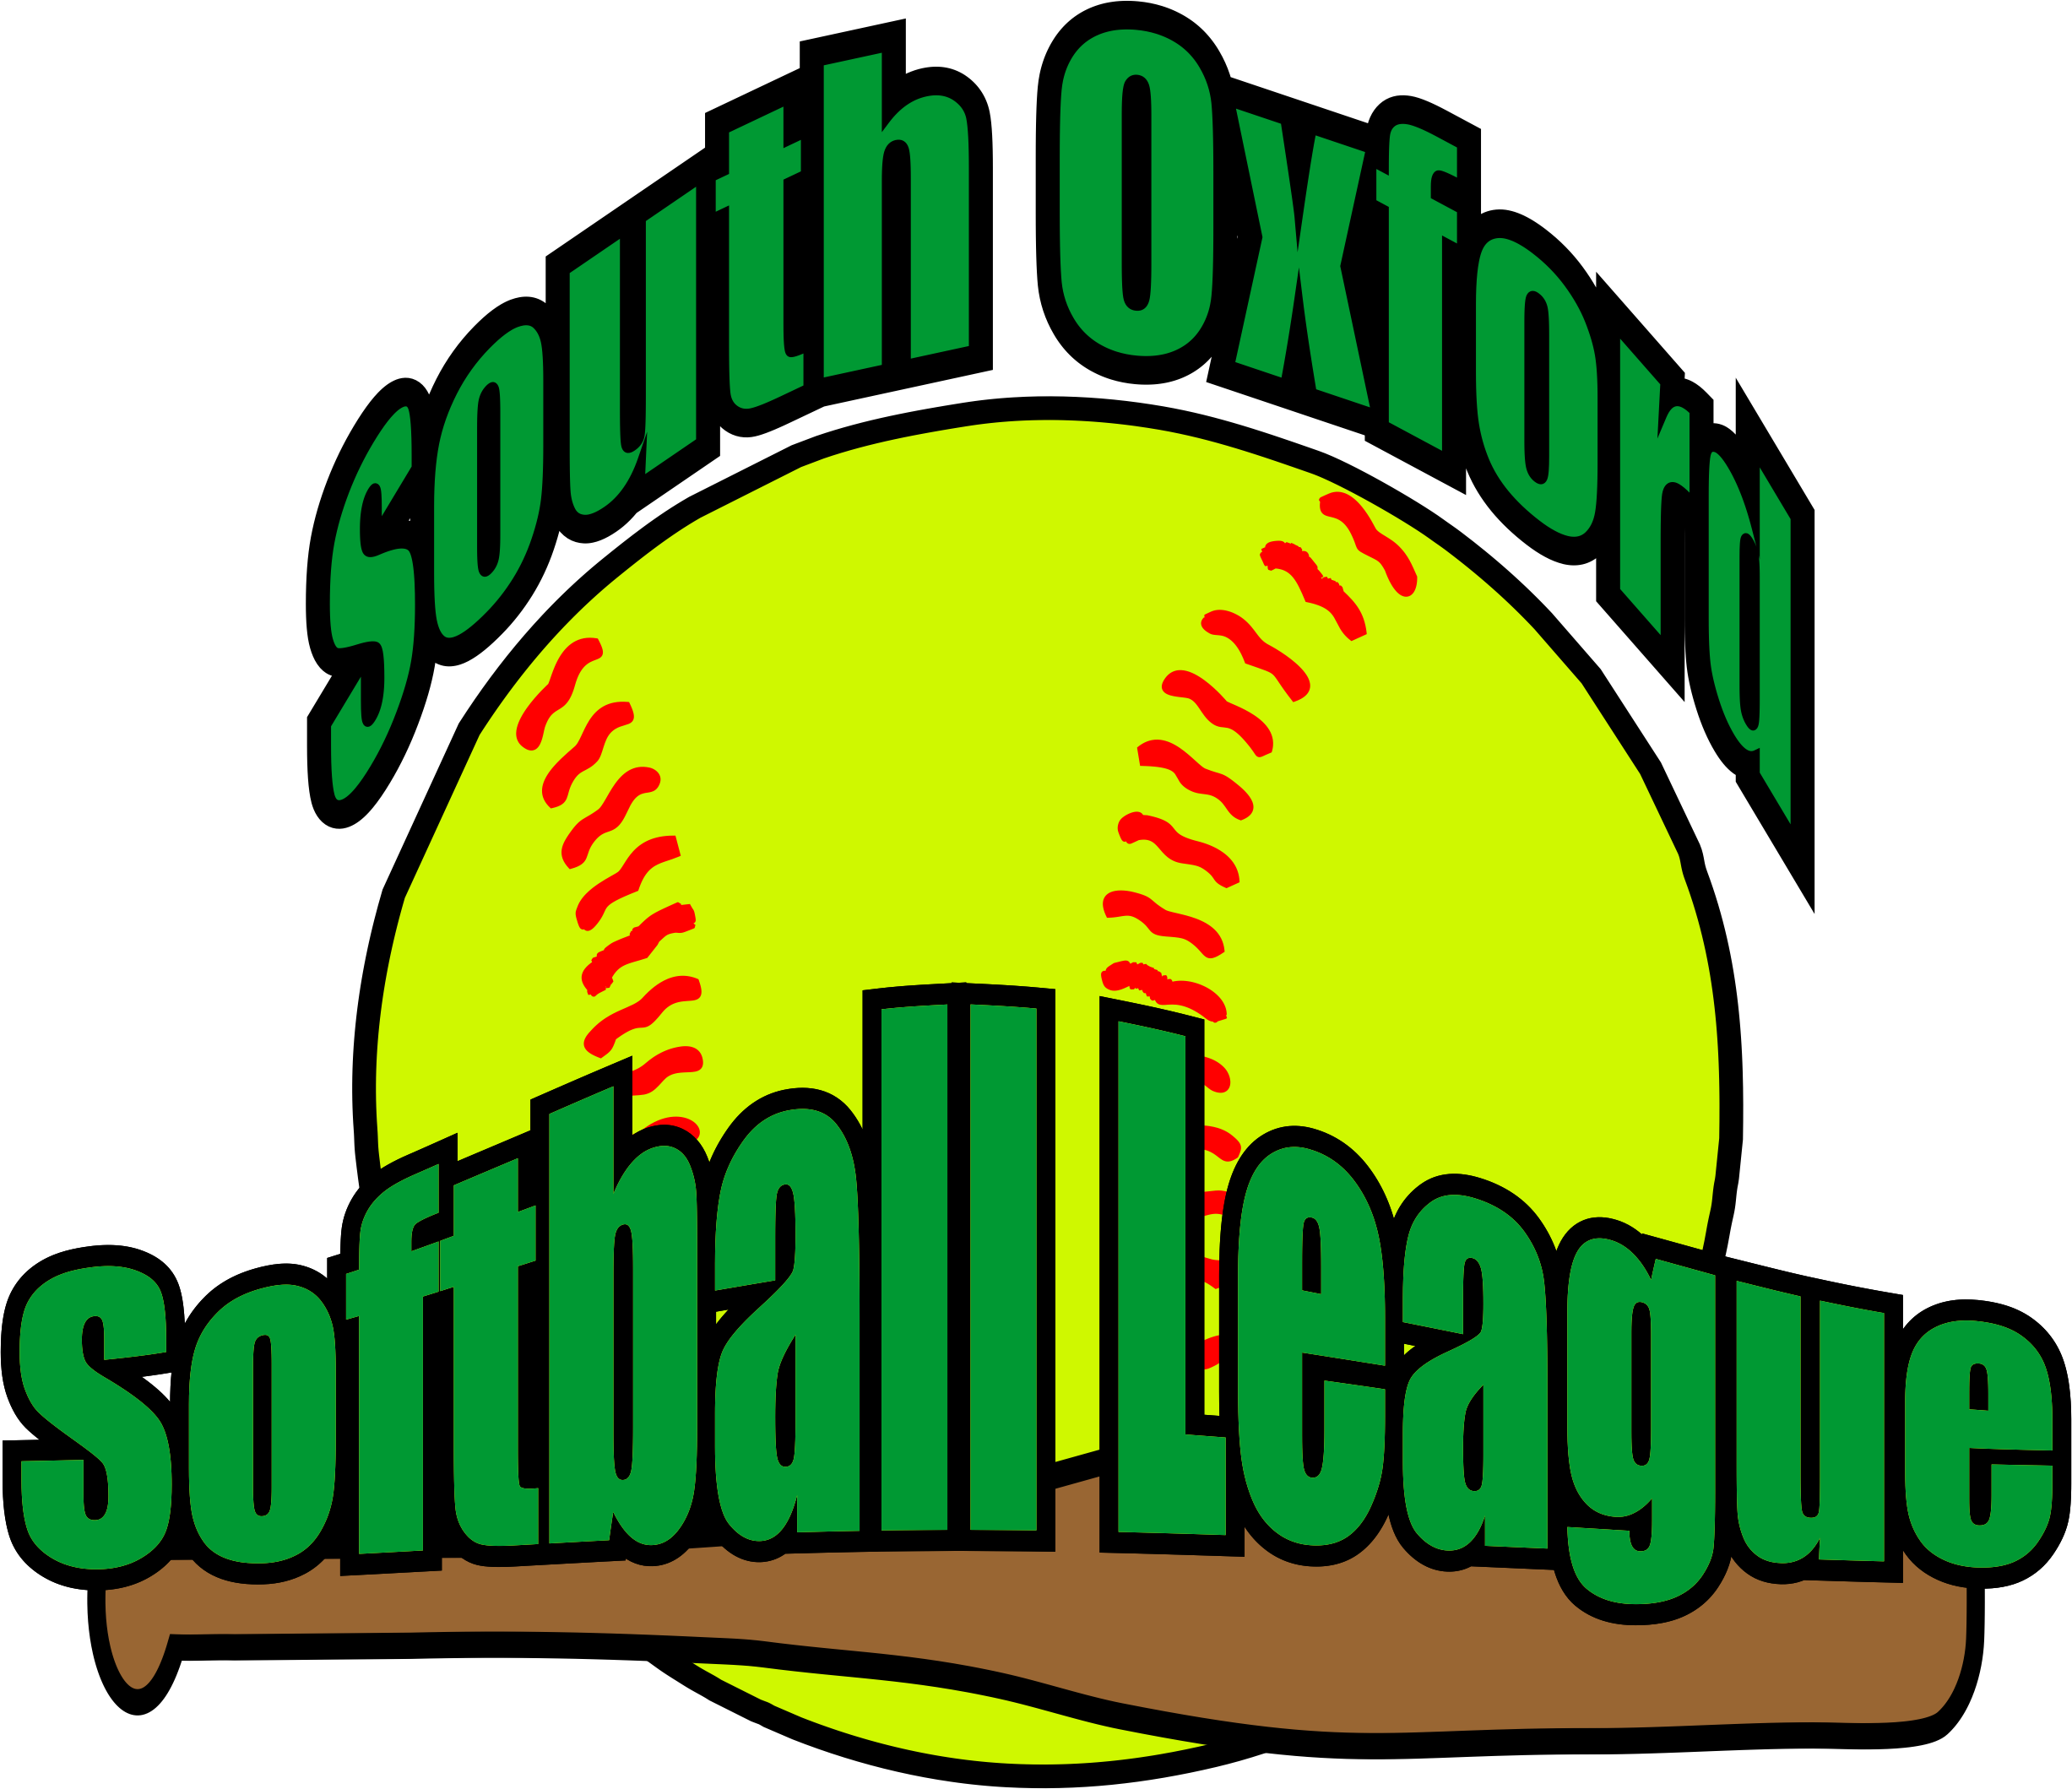 South Oxford Softball League